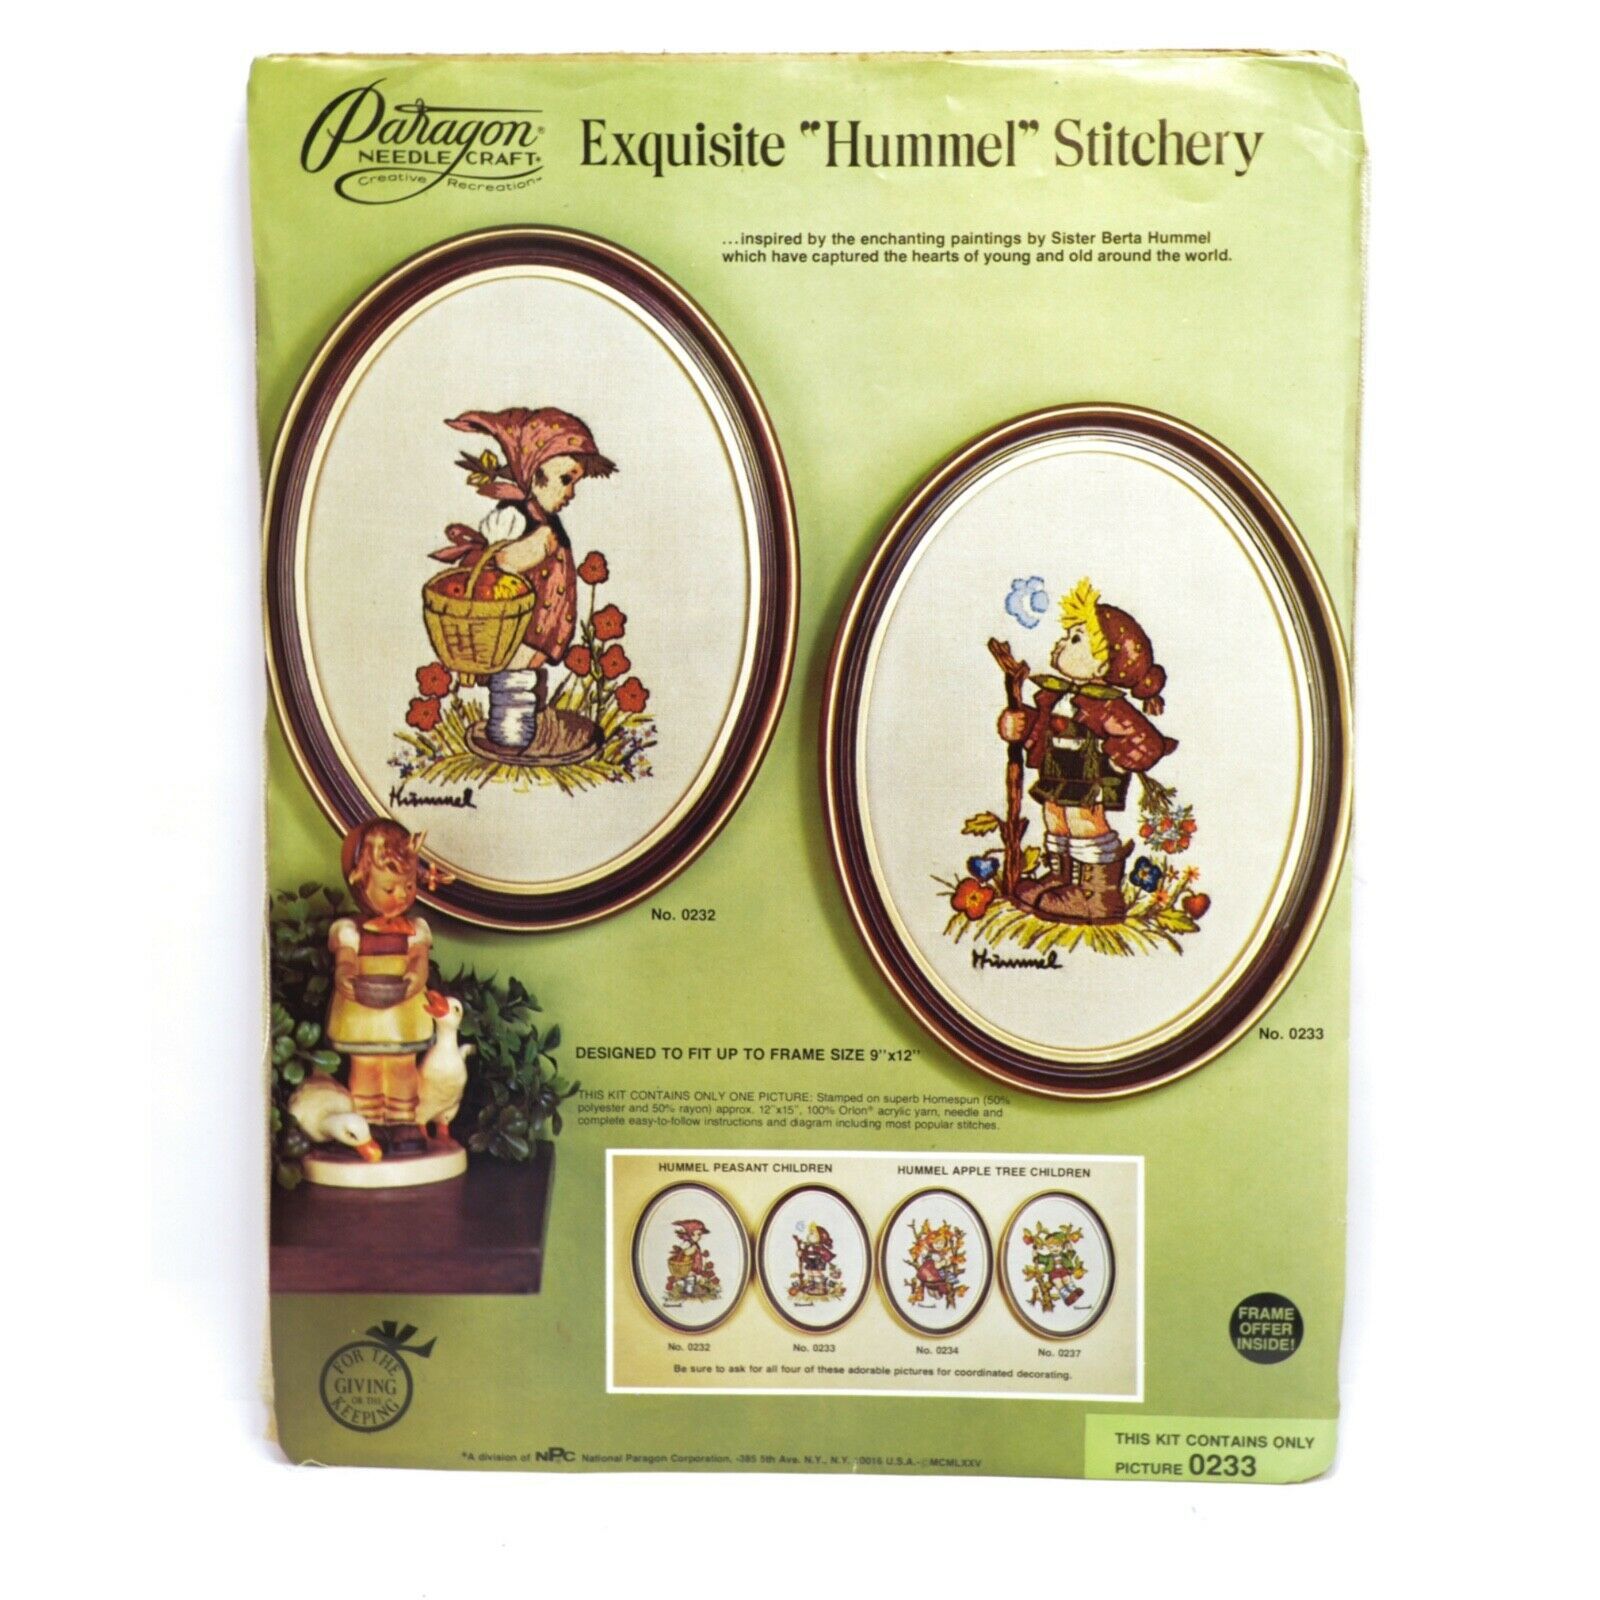 Hummel Peasant Children Exquisite Hummel Stitchery Embroidery Kit Paragon #0233 - $14.82